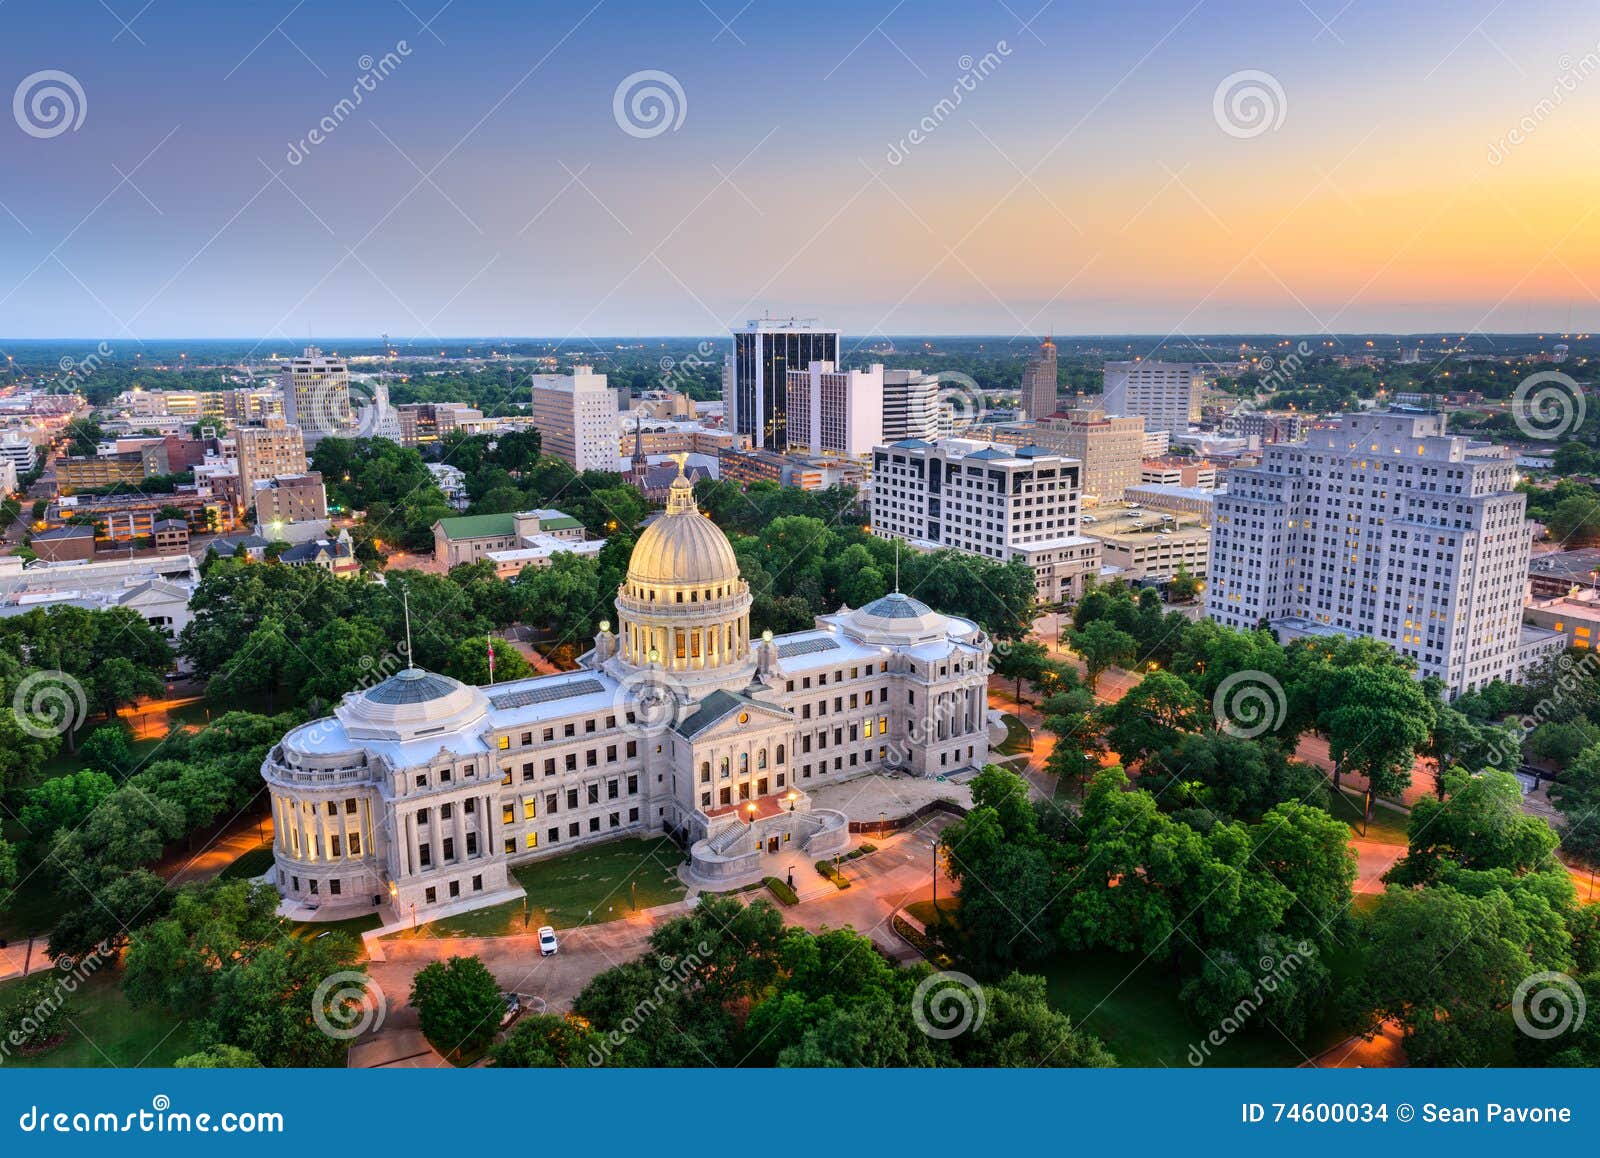 Jackson, Mississippi Skyline Stock Photo - Image of landmark, buildings